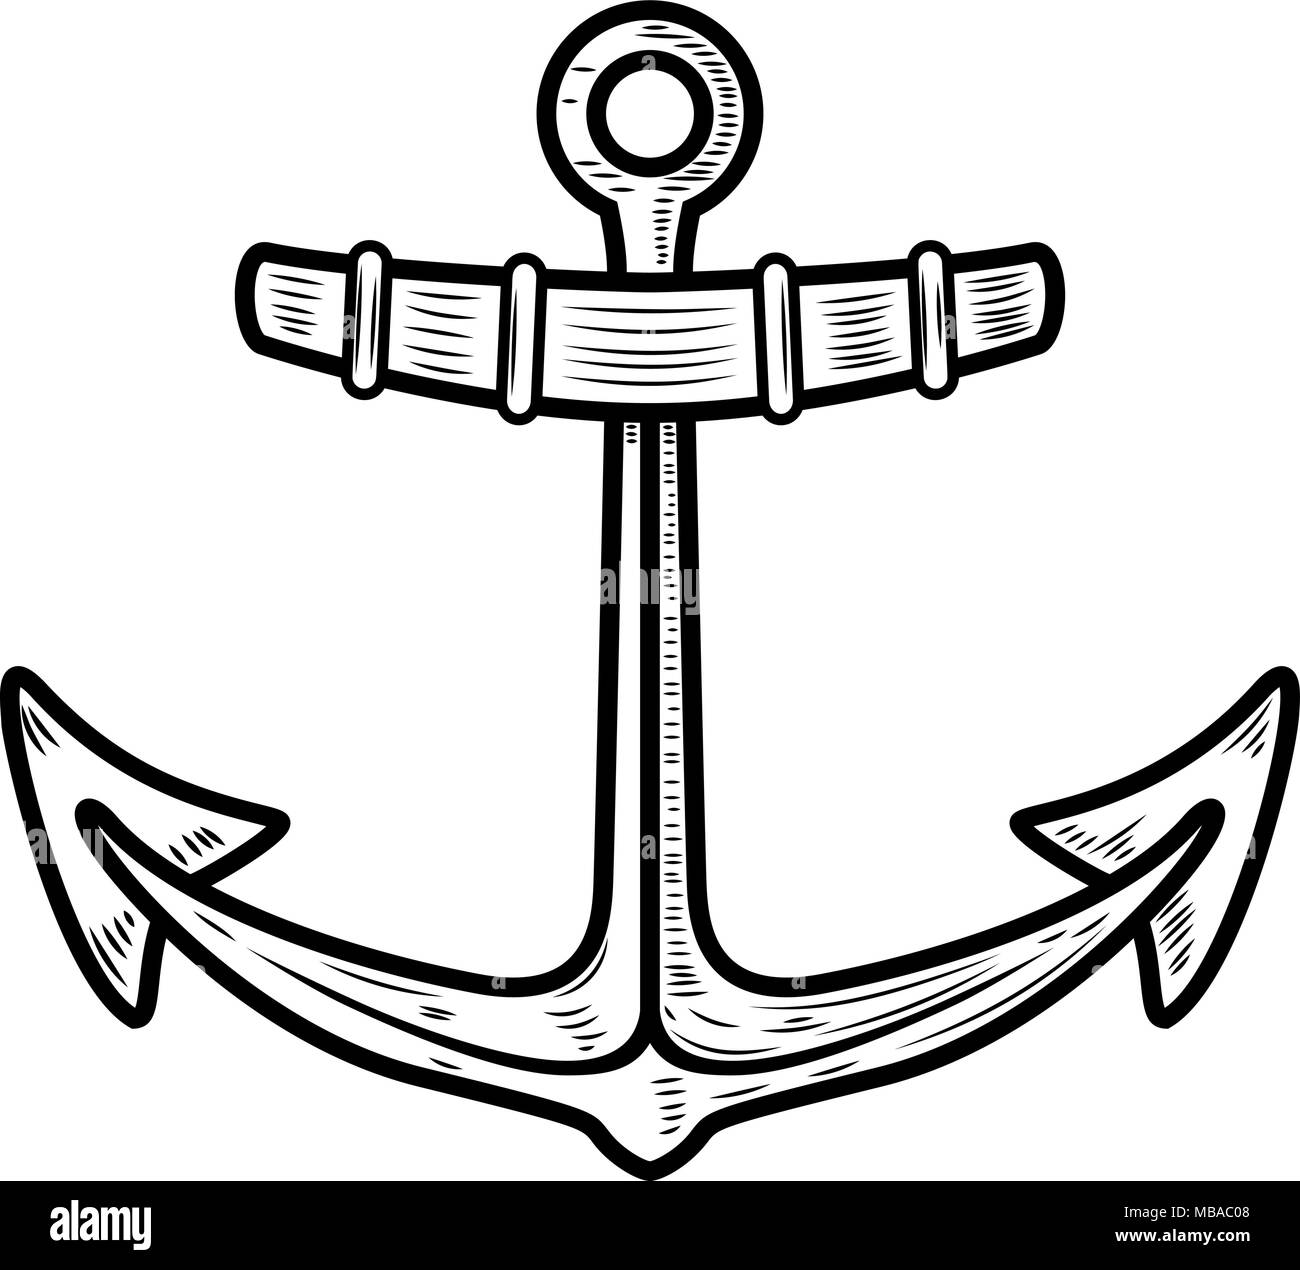 Anchor illustration isolated on white background. Design element for logo, label, emblem, sign. Vector illustration Stock Vector